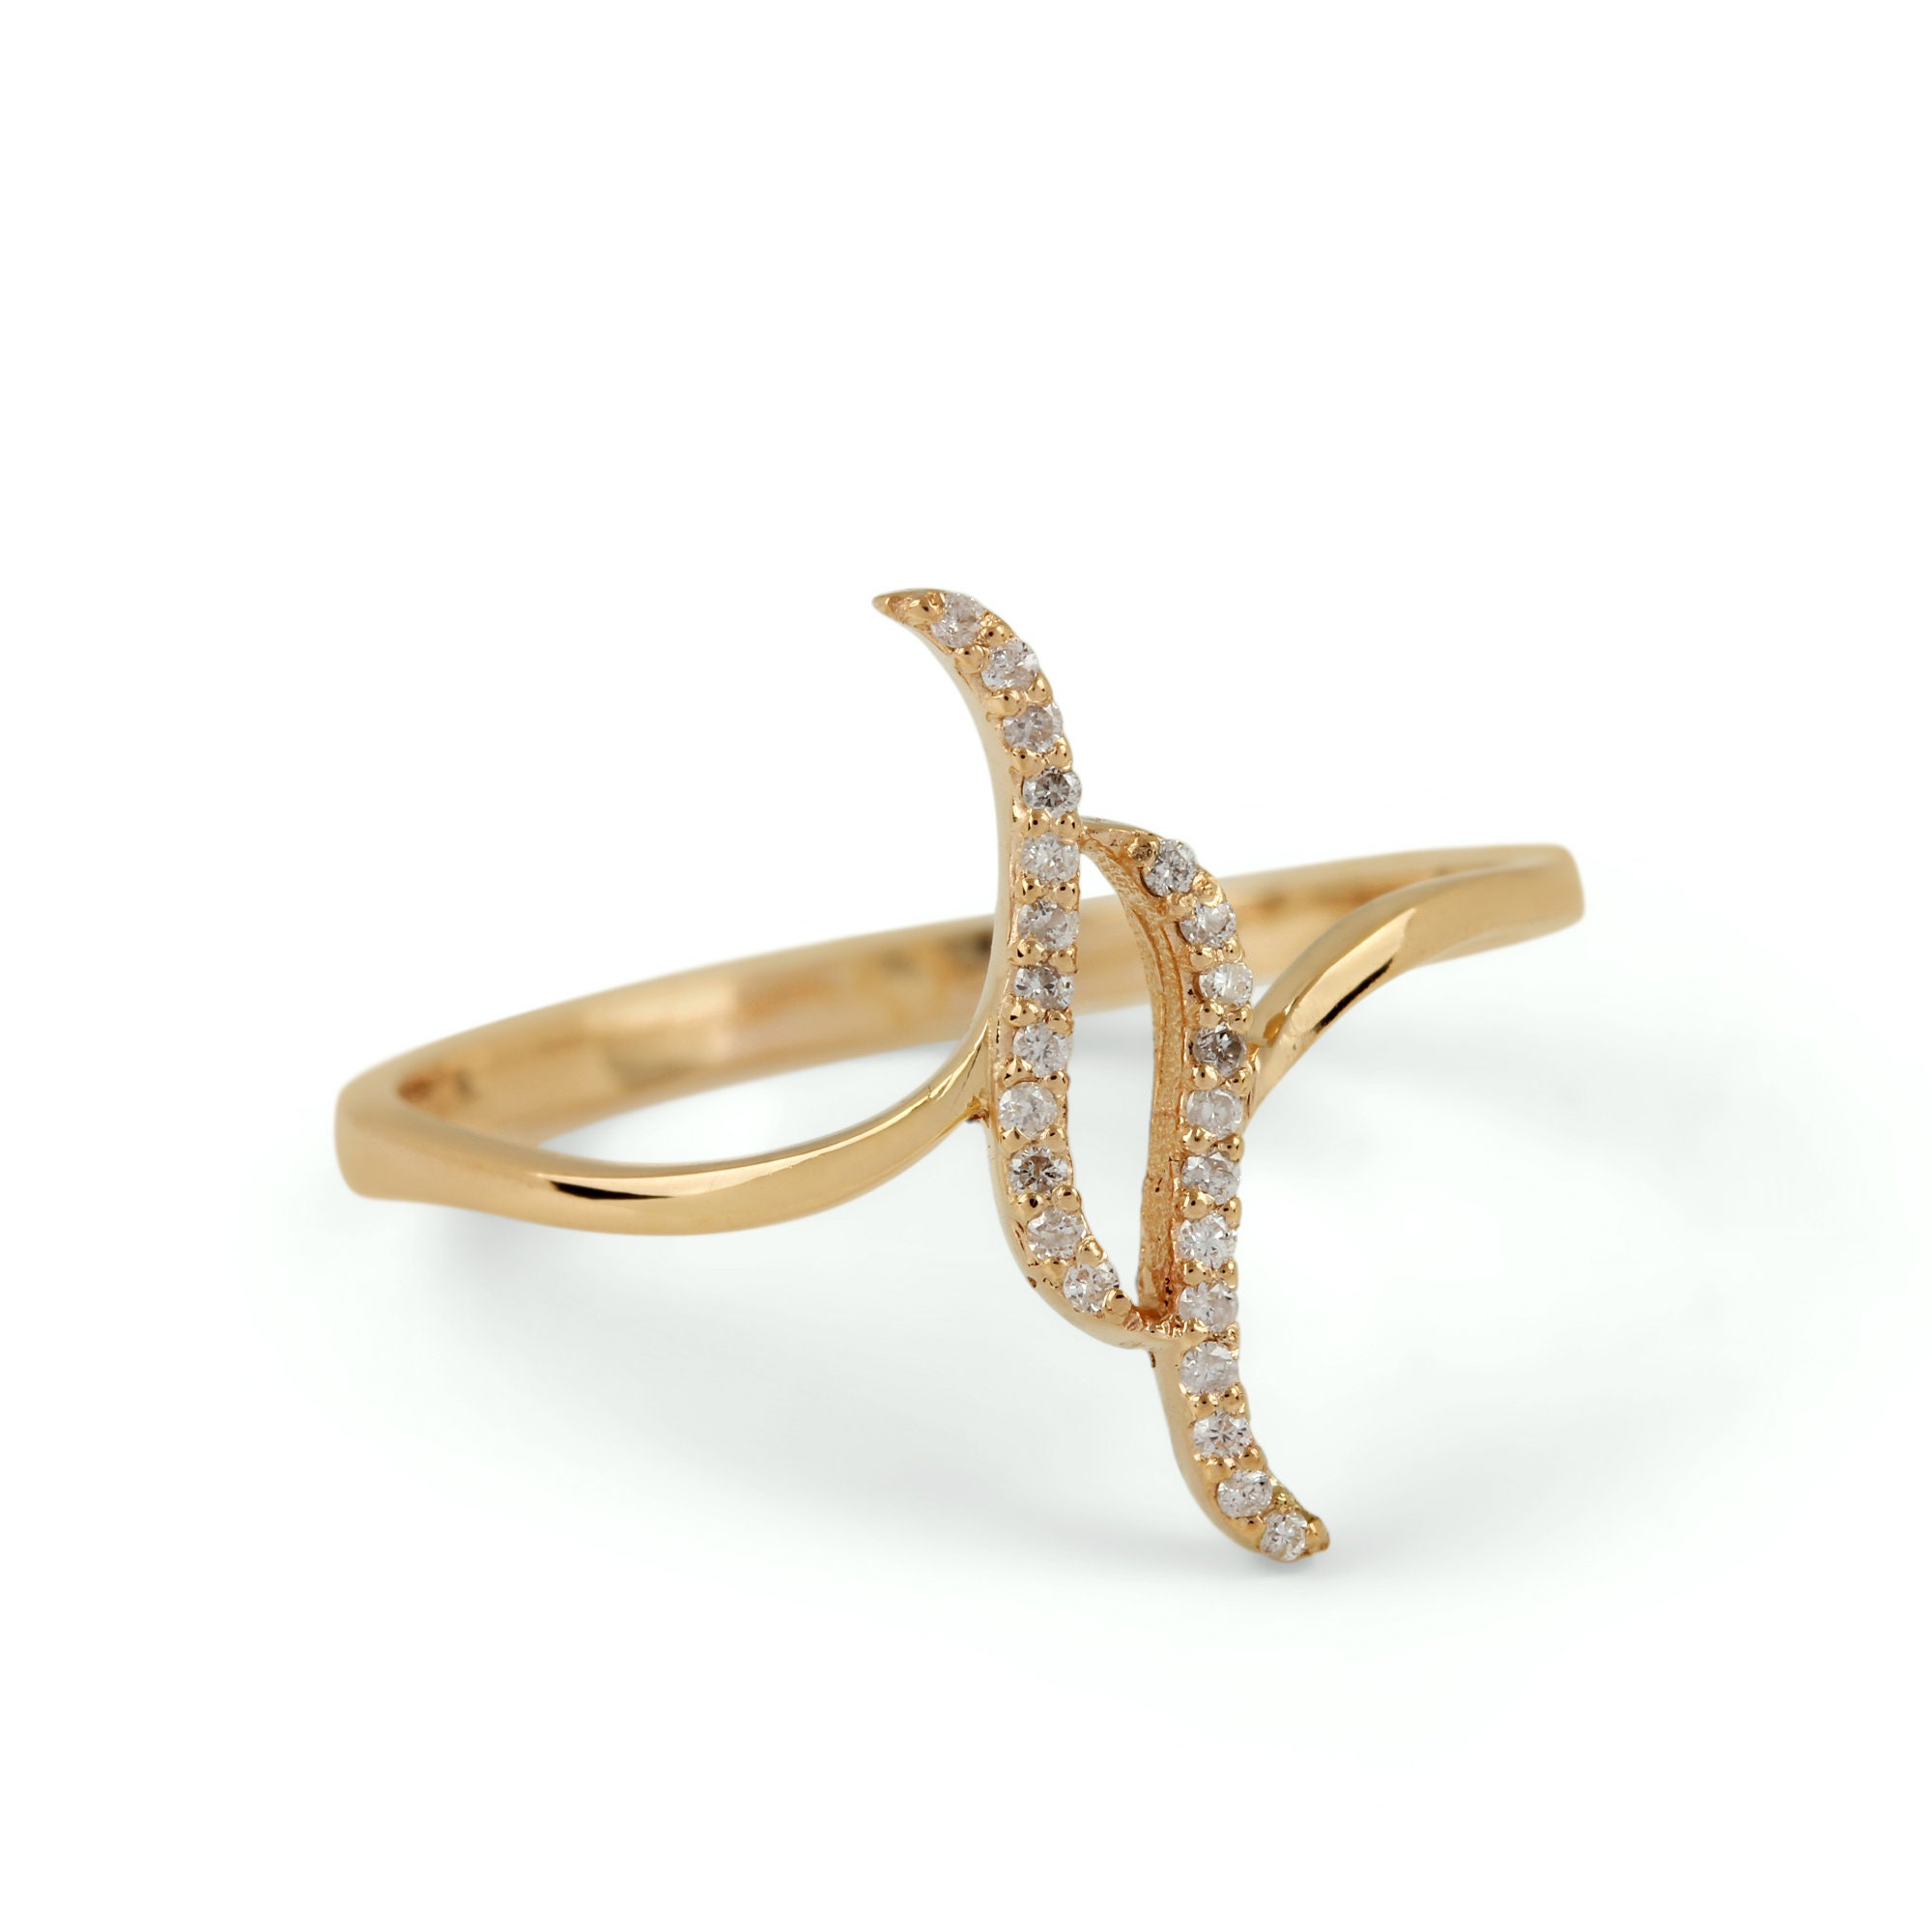 Buy Trendy Fine Gold & Diamond Jewellery for Women Online | Mia by Tanishq